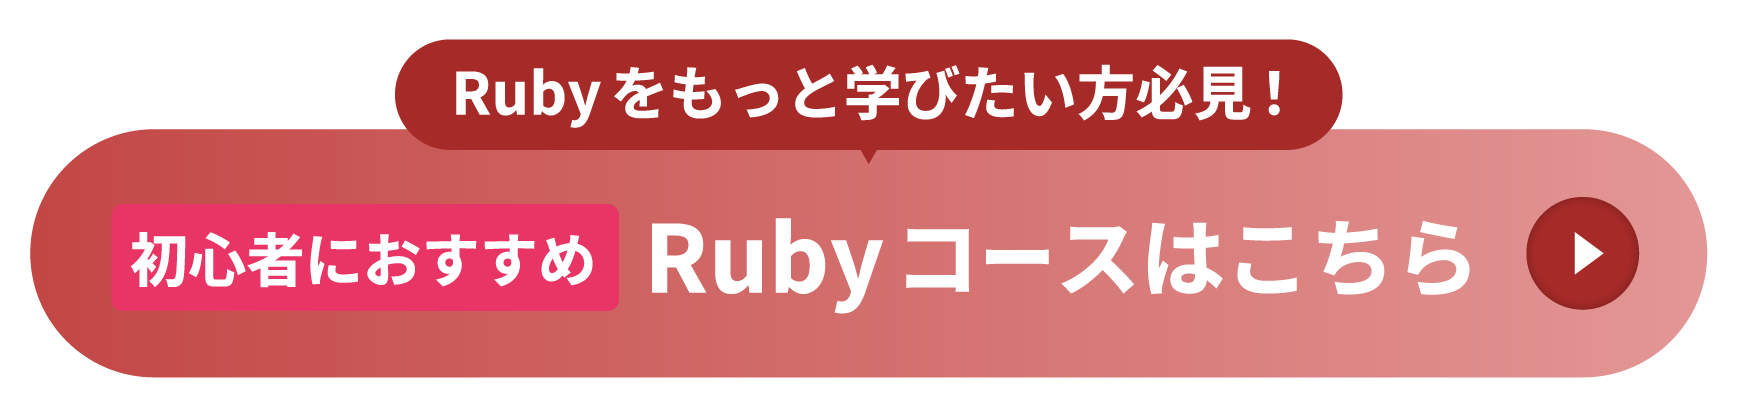 Rubyコースはこちら